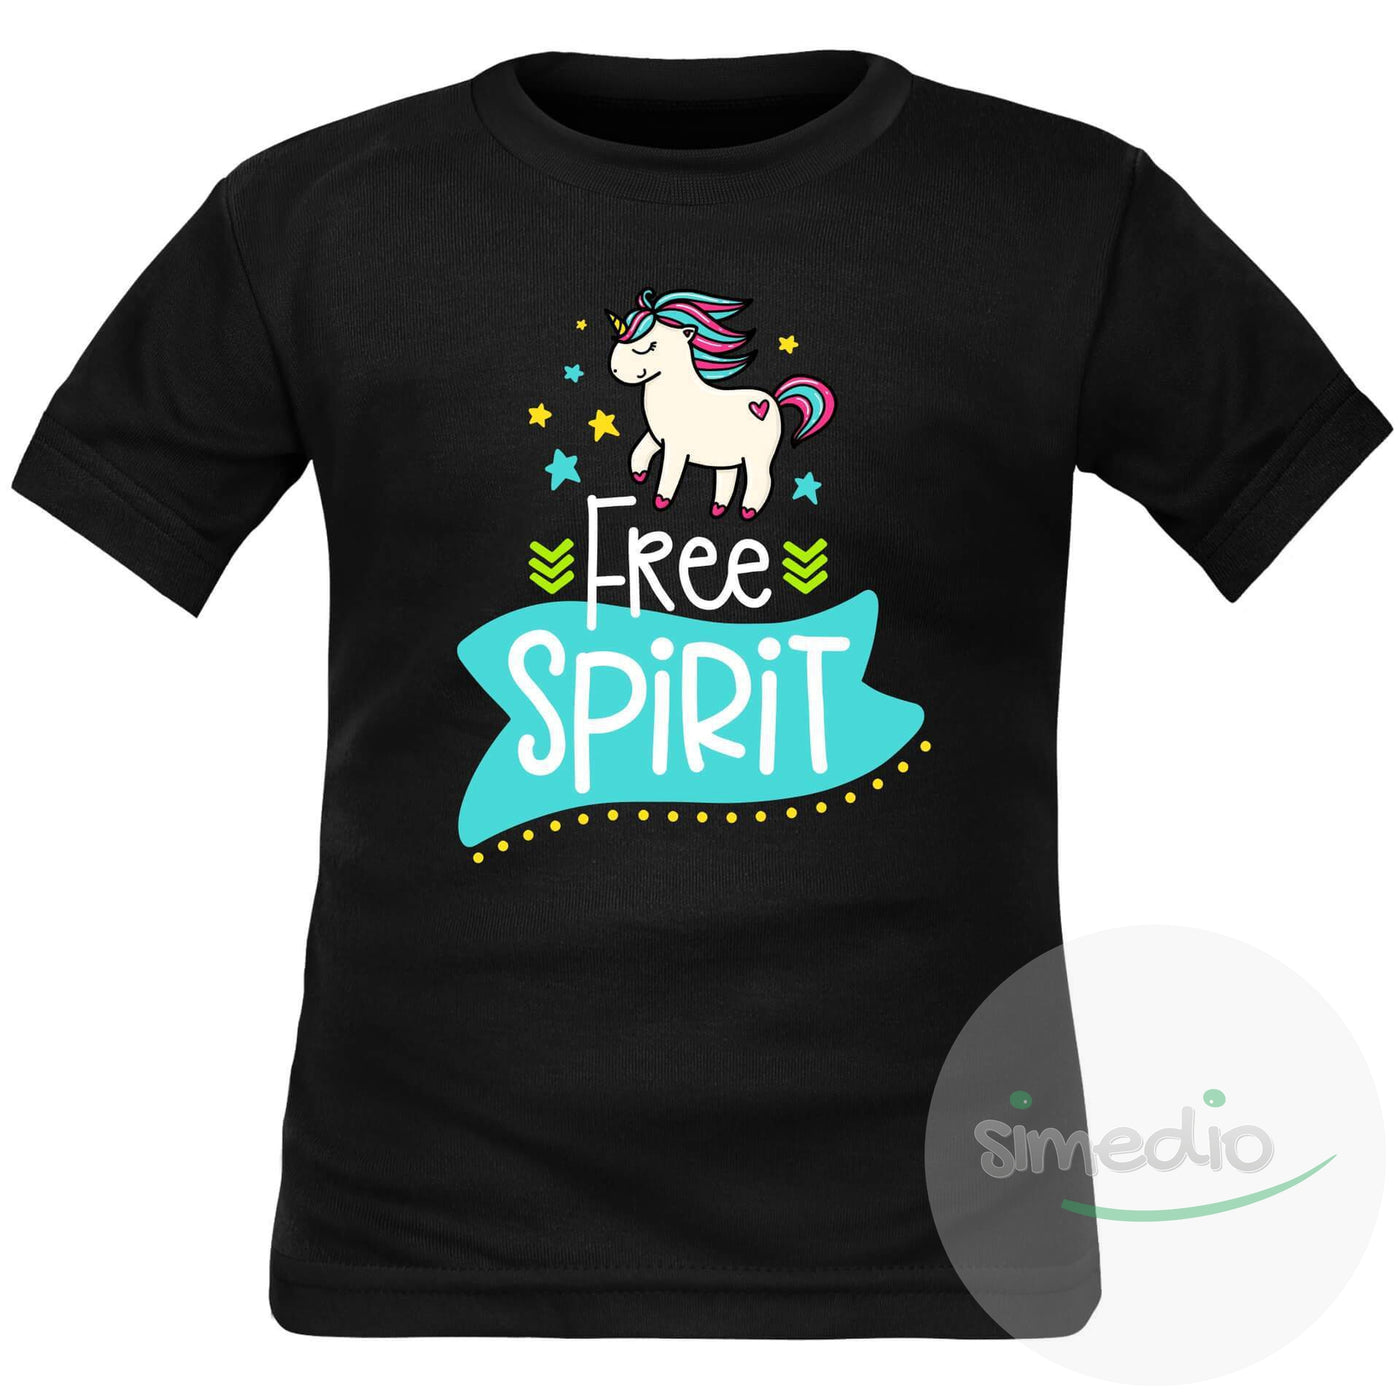 Tee shirt enfant original : FREE spirit (licorne), Noir, 2 ans, Courtes - SiMEDIO